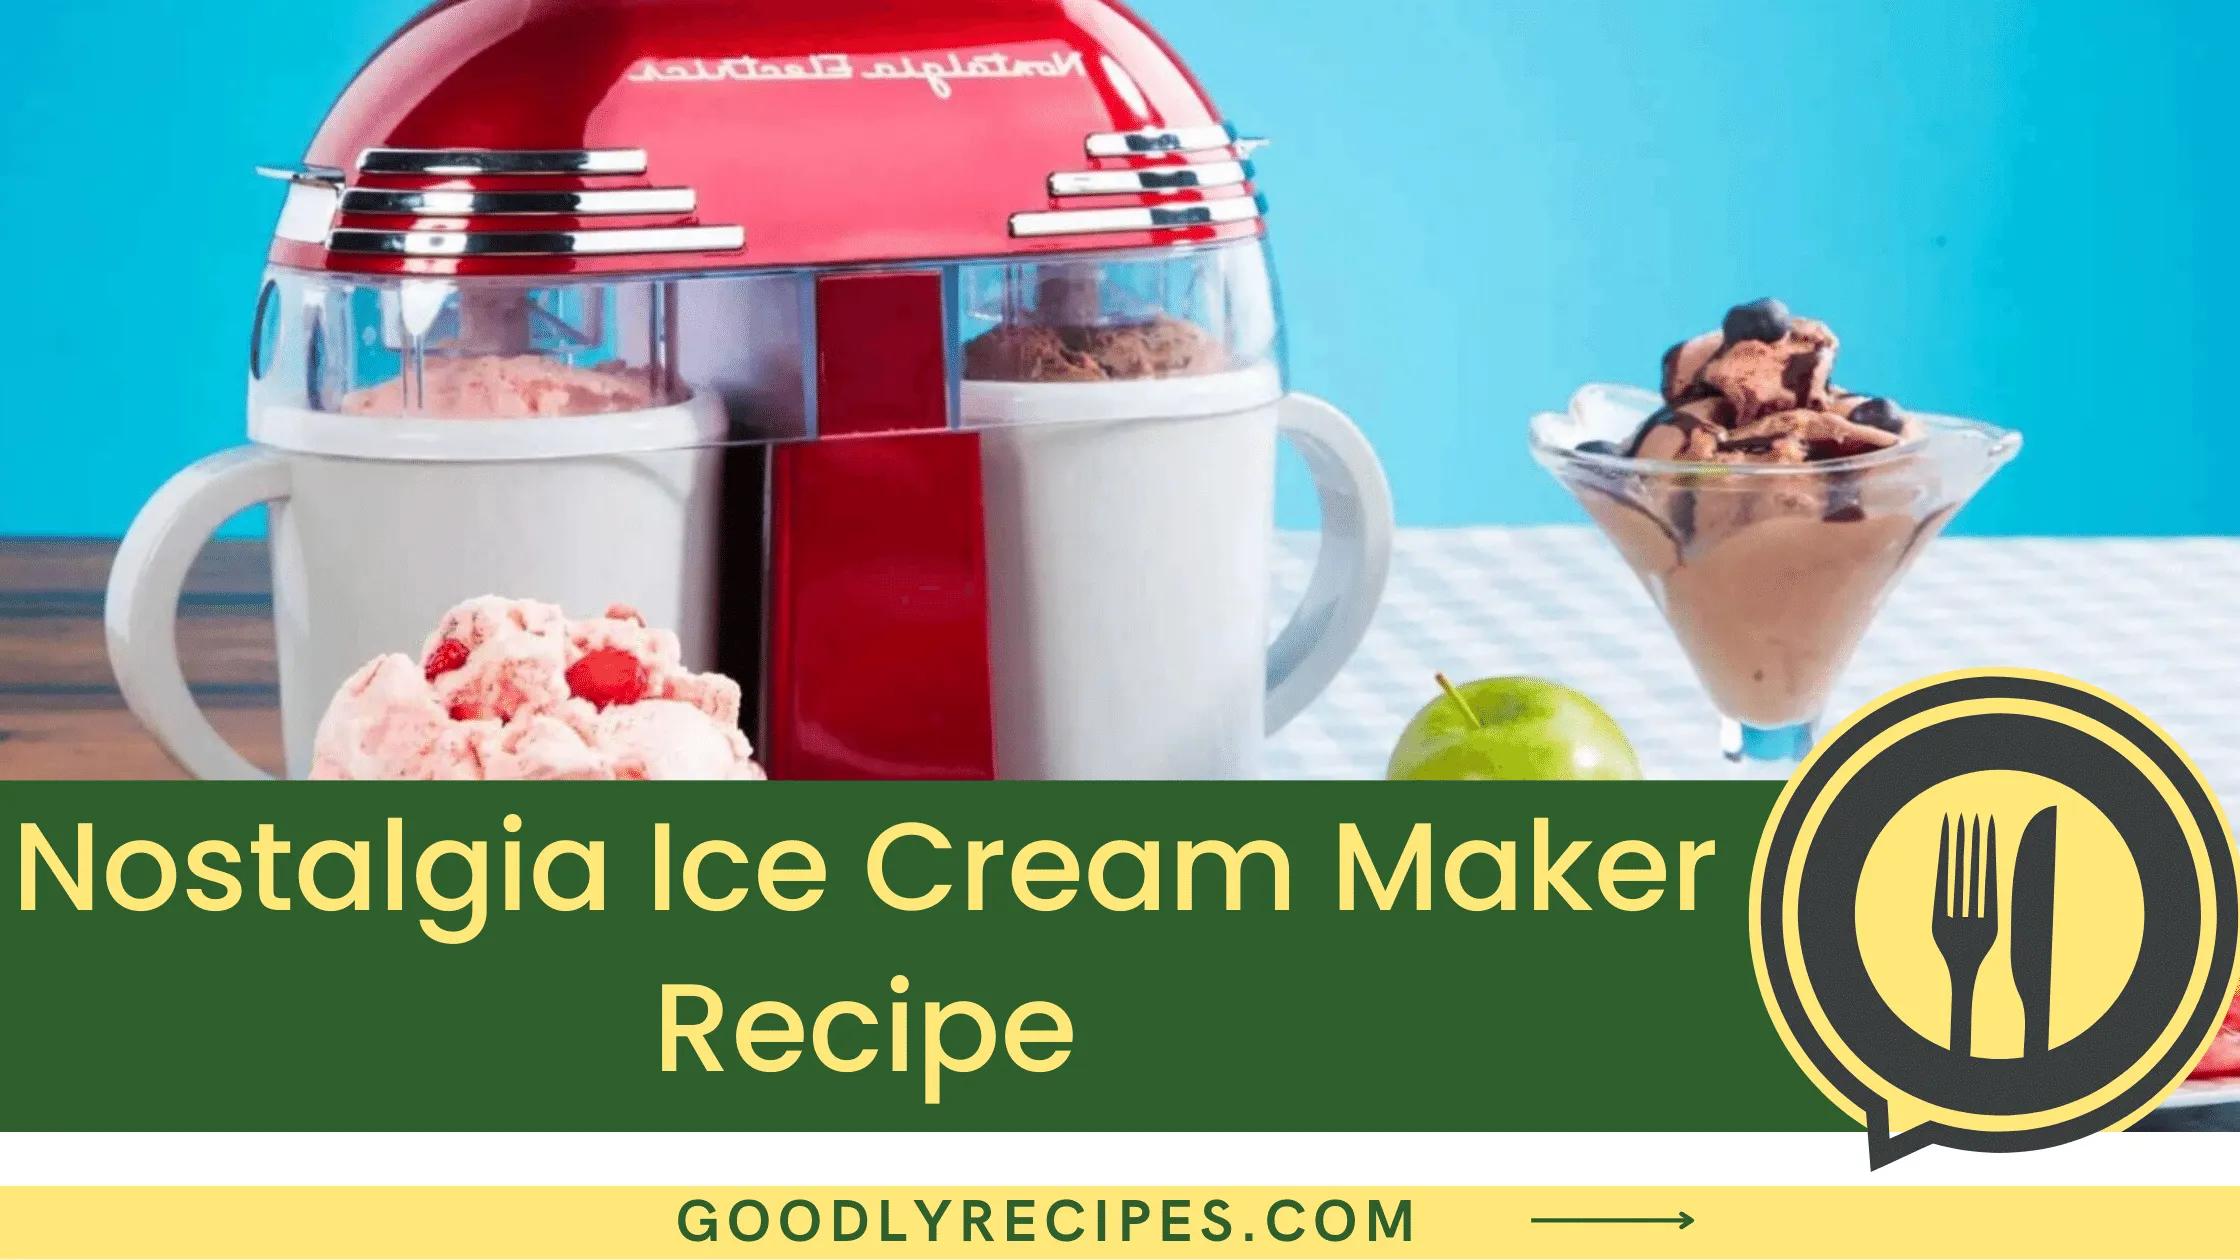 What is Nostalgia Ice Cream Maker?